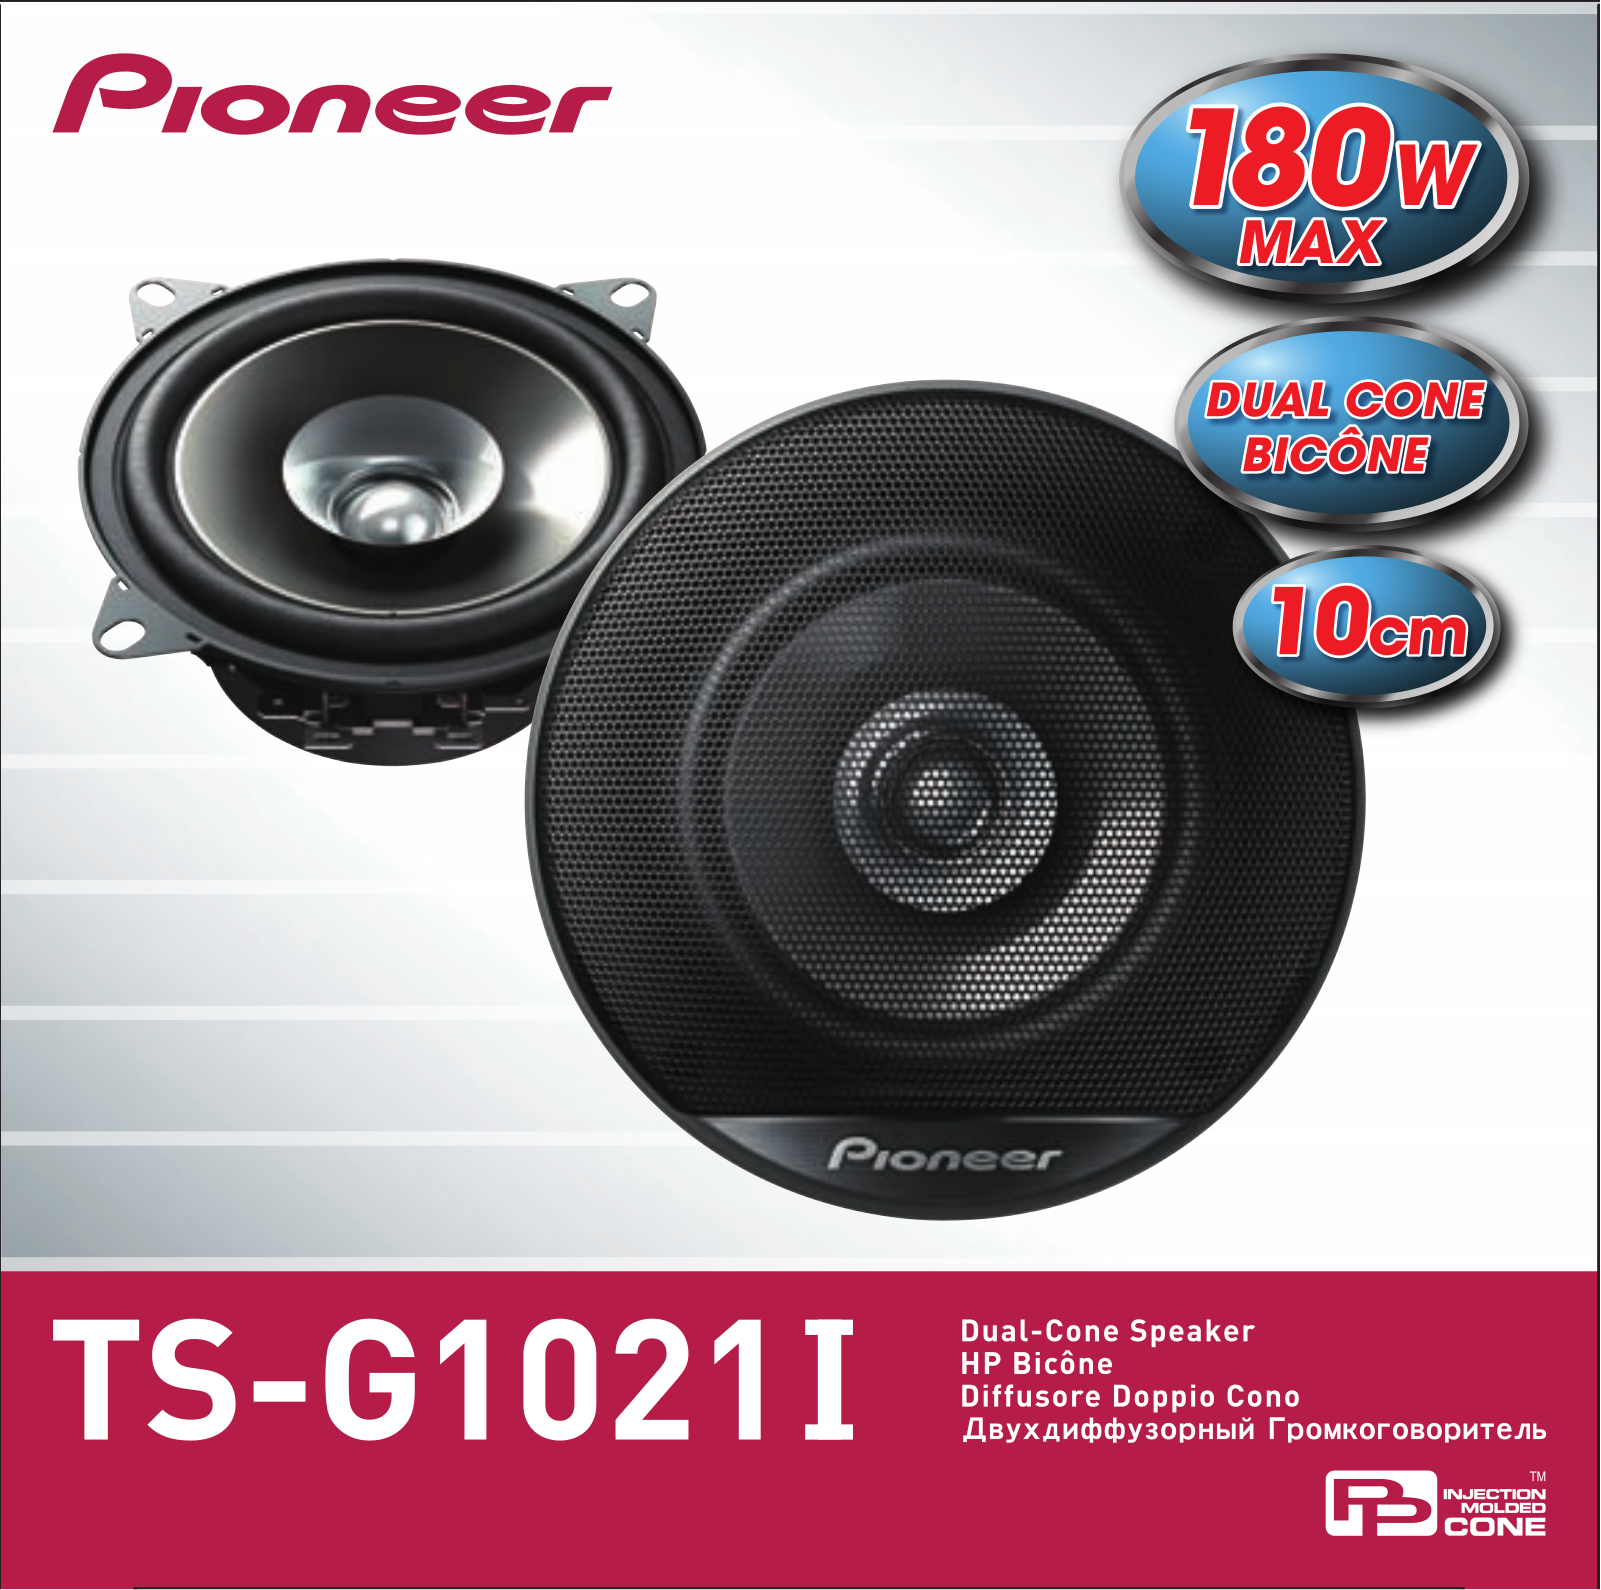 Pioneer TS-G1021I User Manual